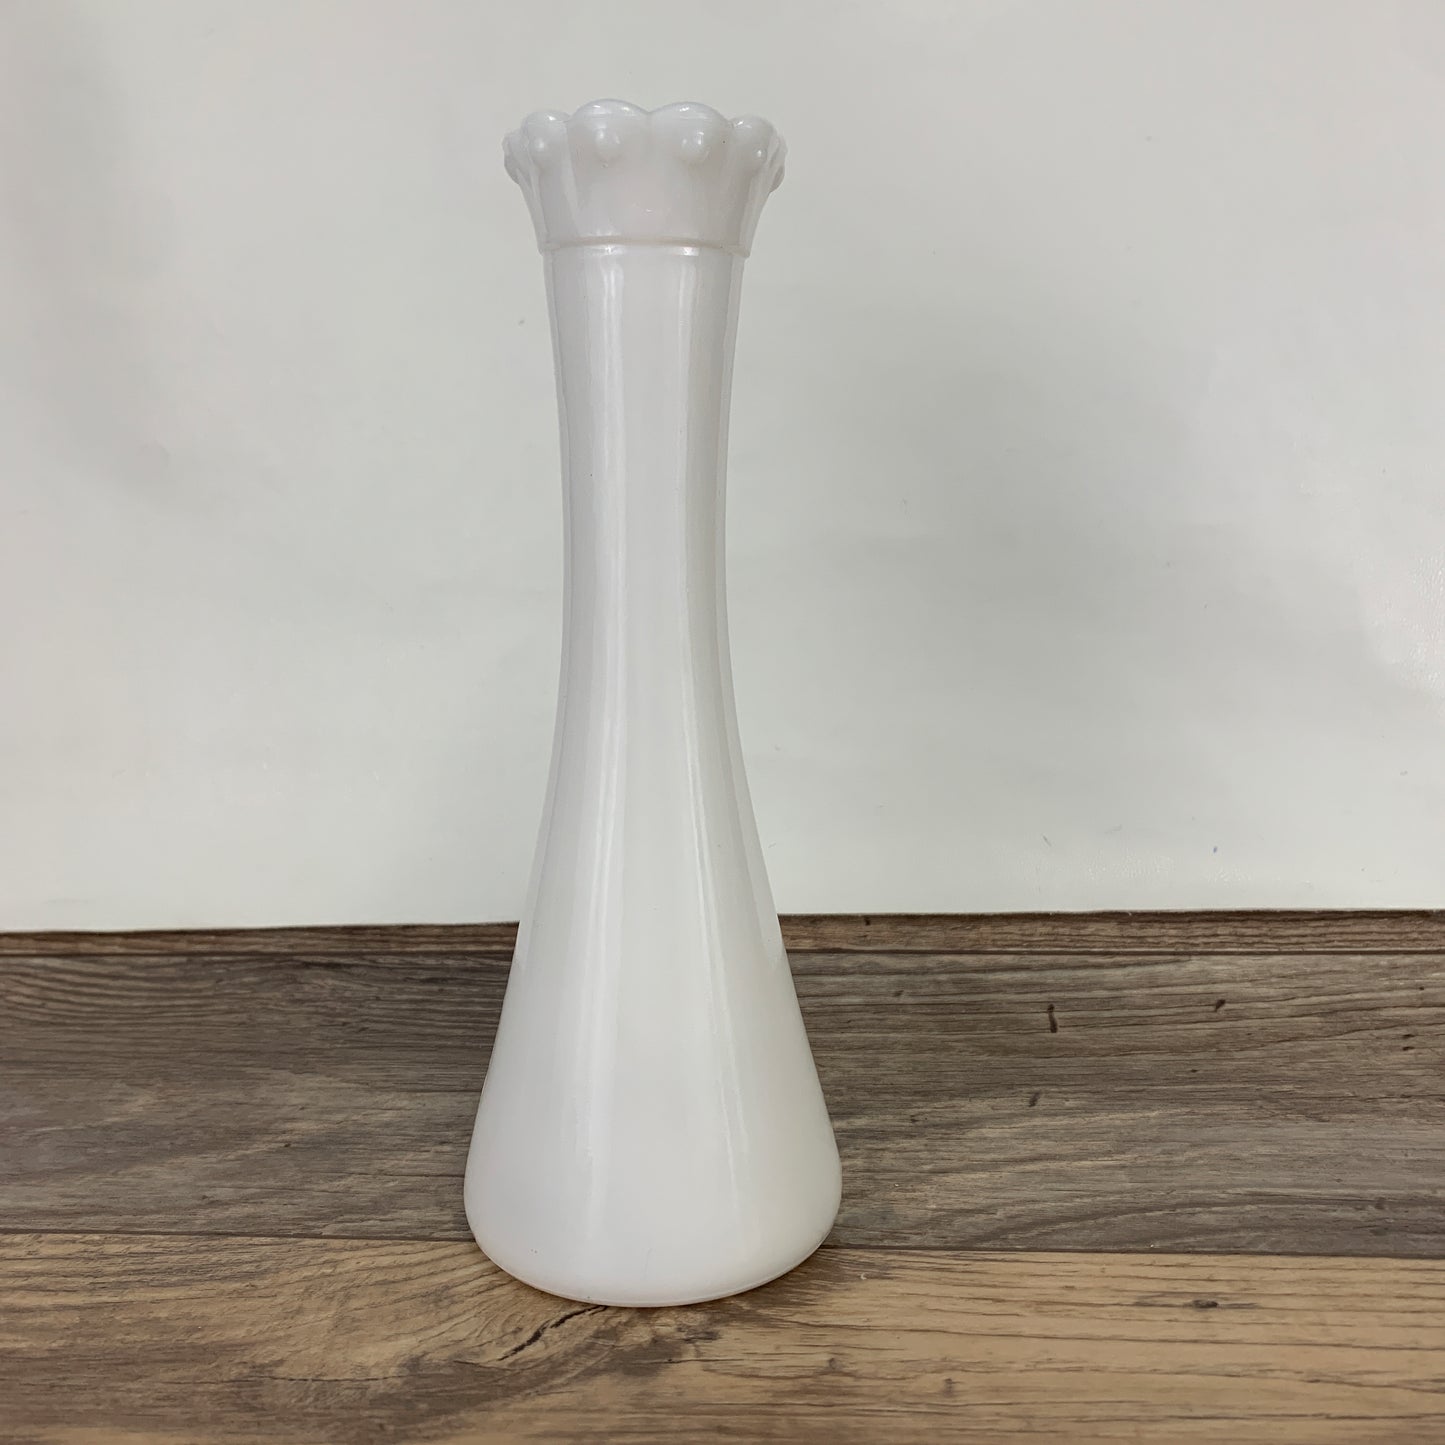 White Bud Vase with Scalloped Rim, Vintage Milk Glass Bud Vase